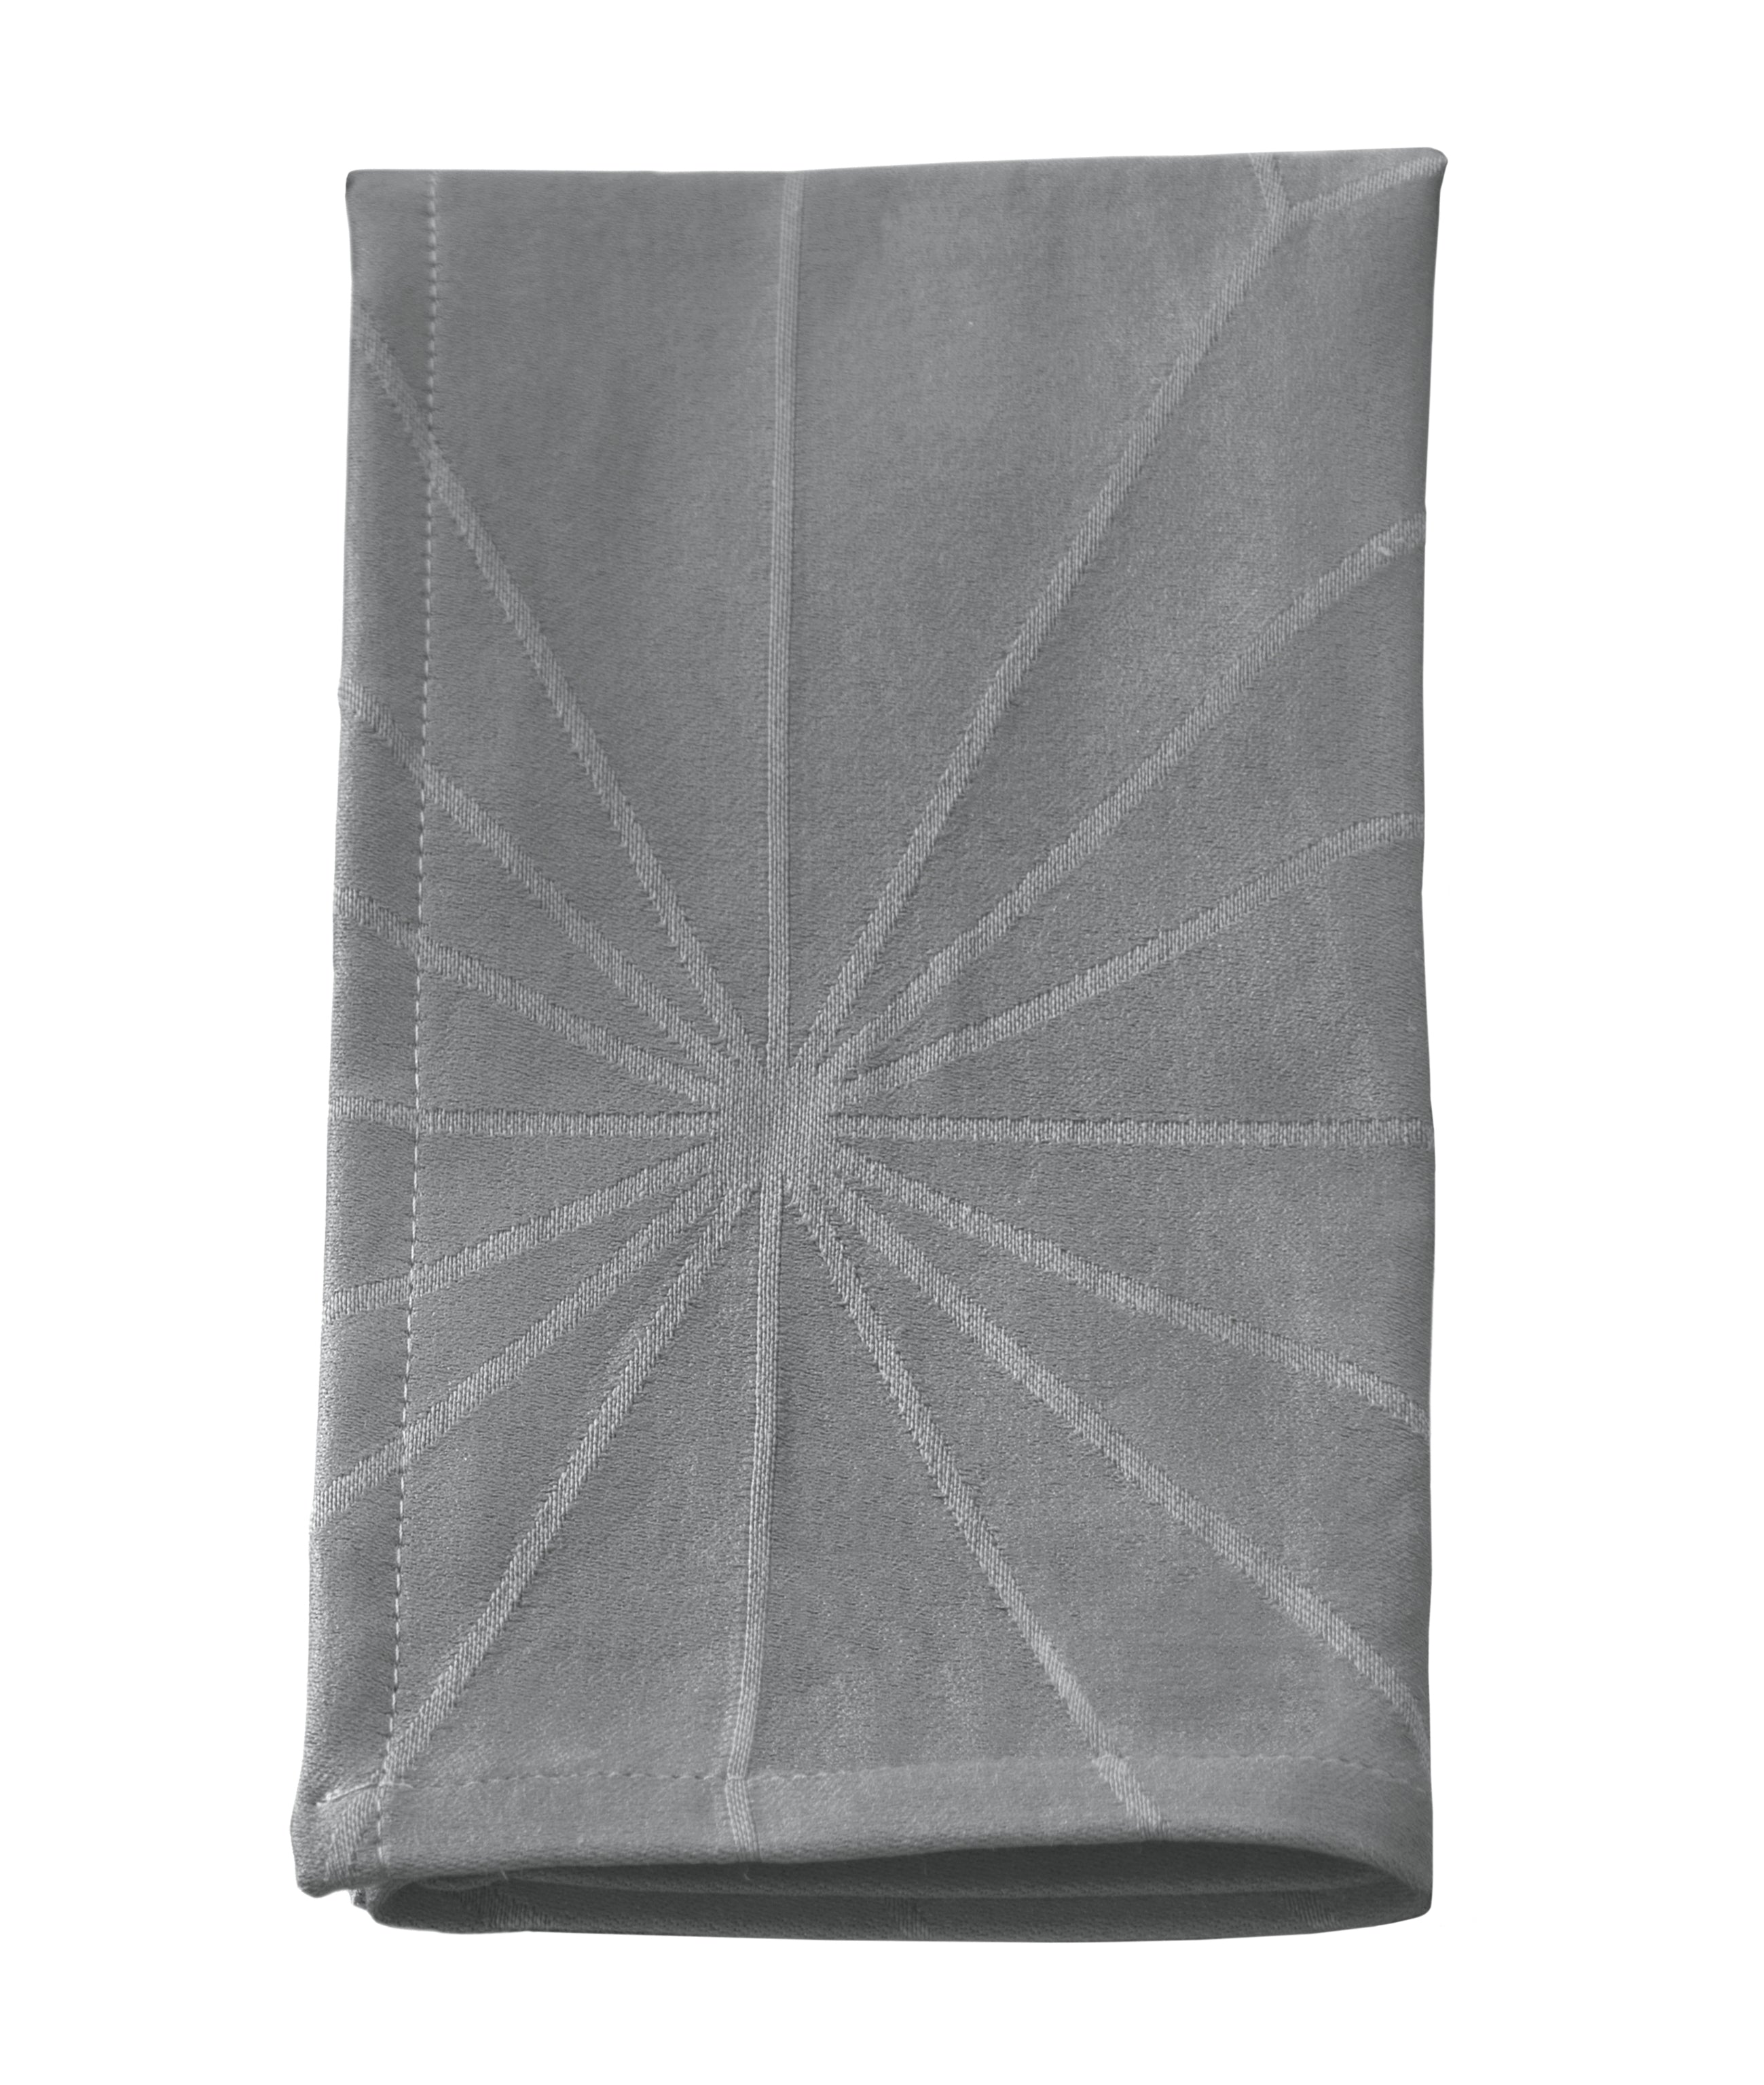 STARS cloth napkin 4 pcs - winter grey